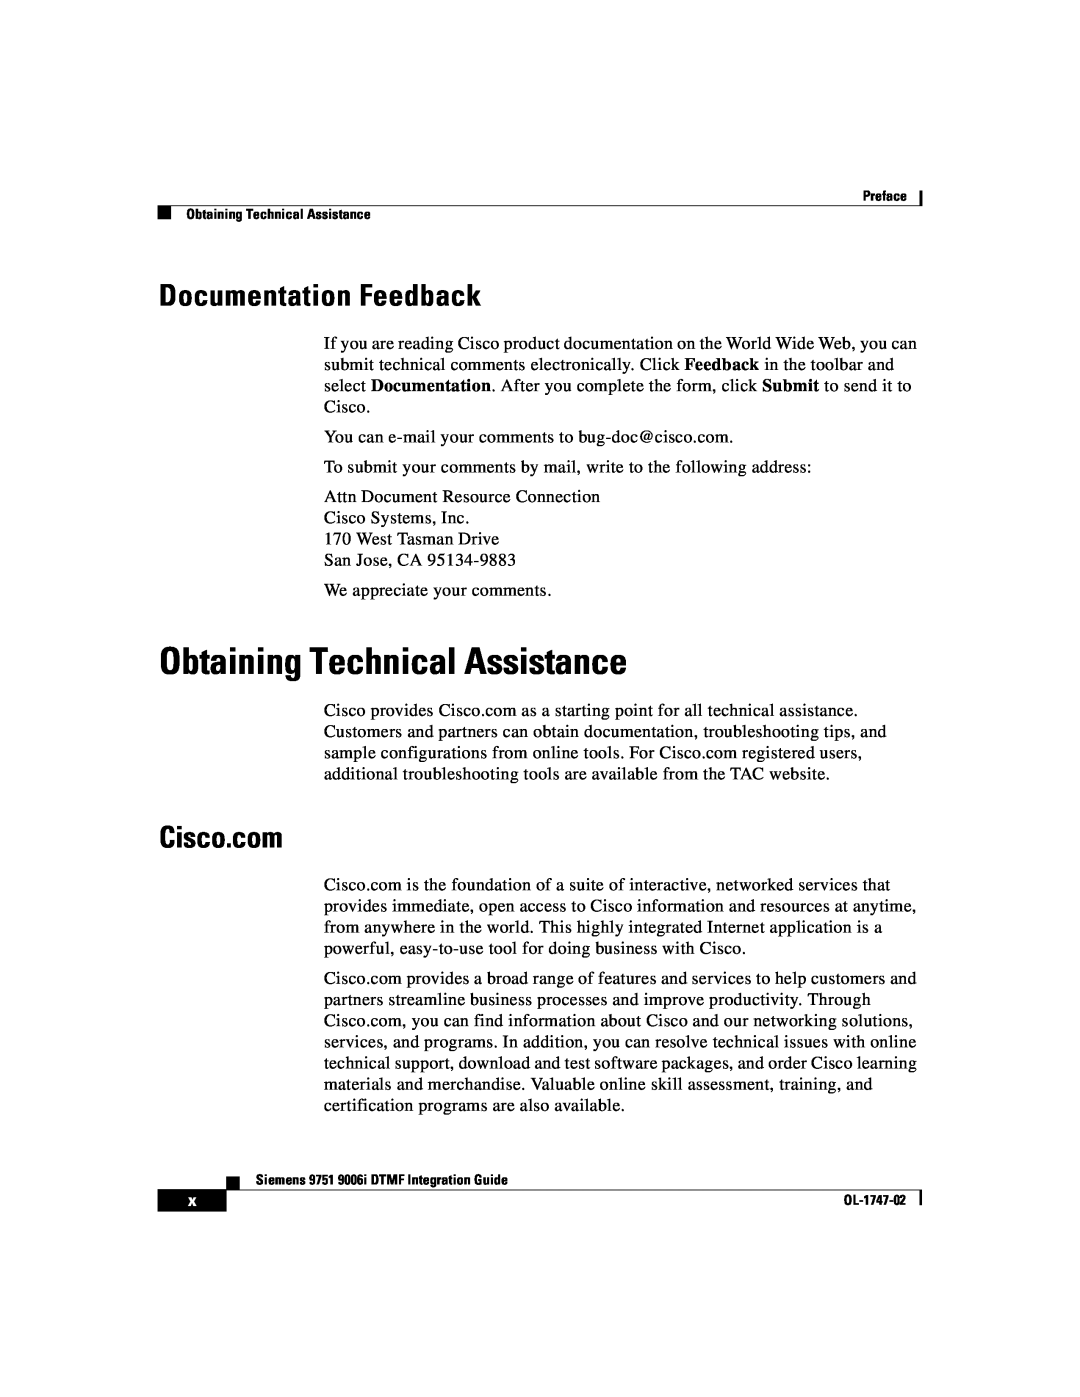 Able Planet OL-1747-02 manual Obtaining Technical Assistance, Documentation Feedback, Cisco.com 